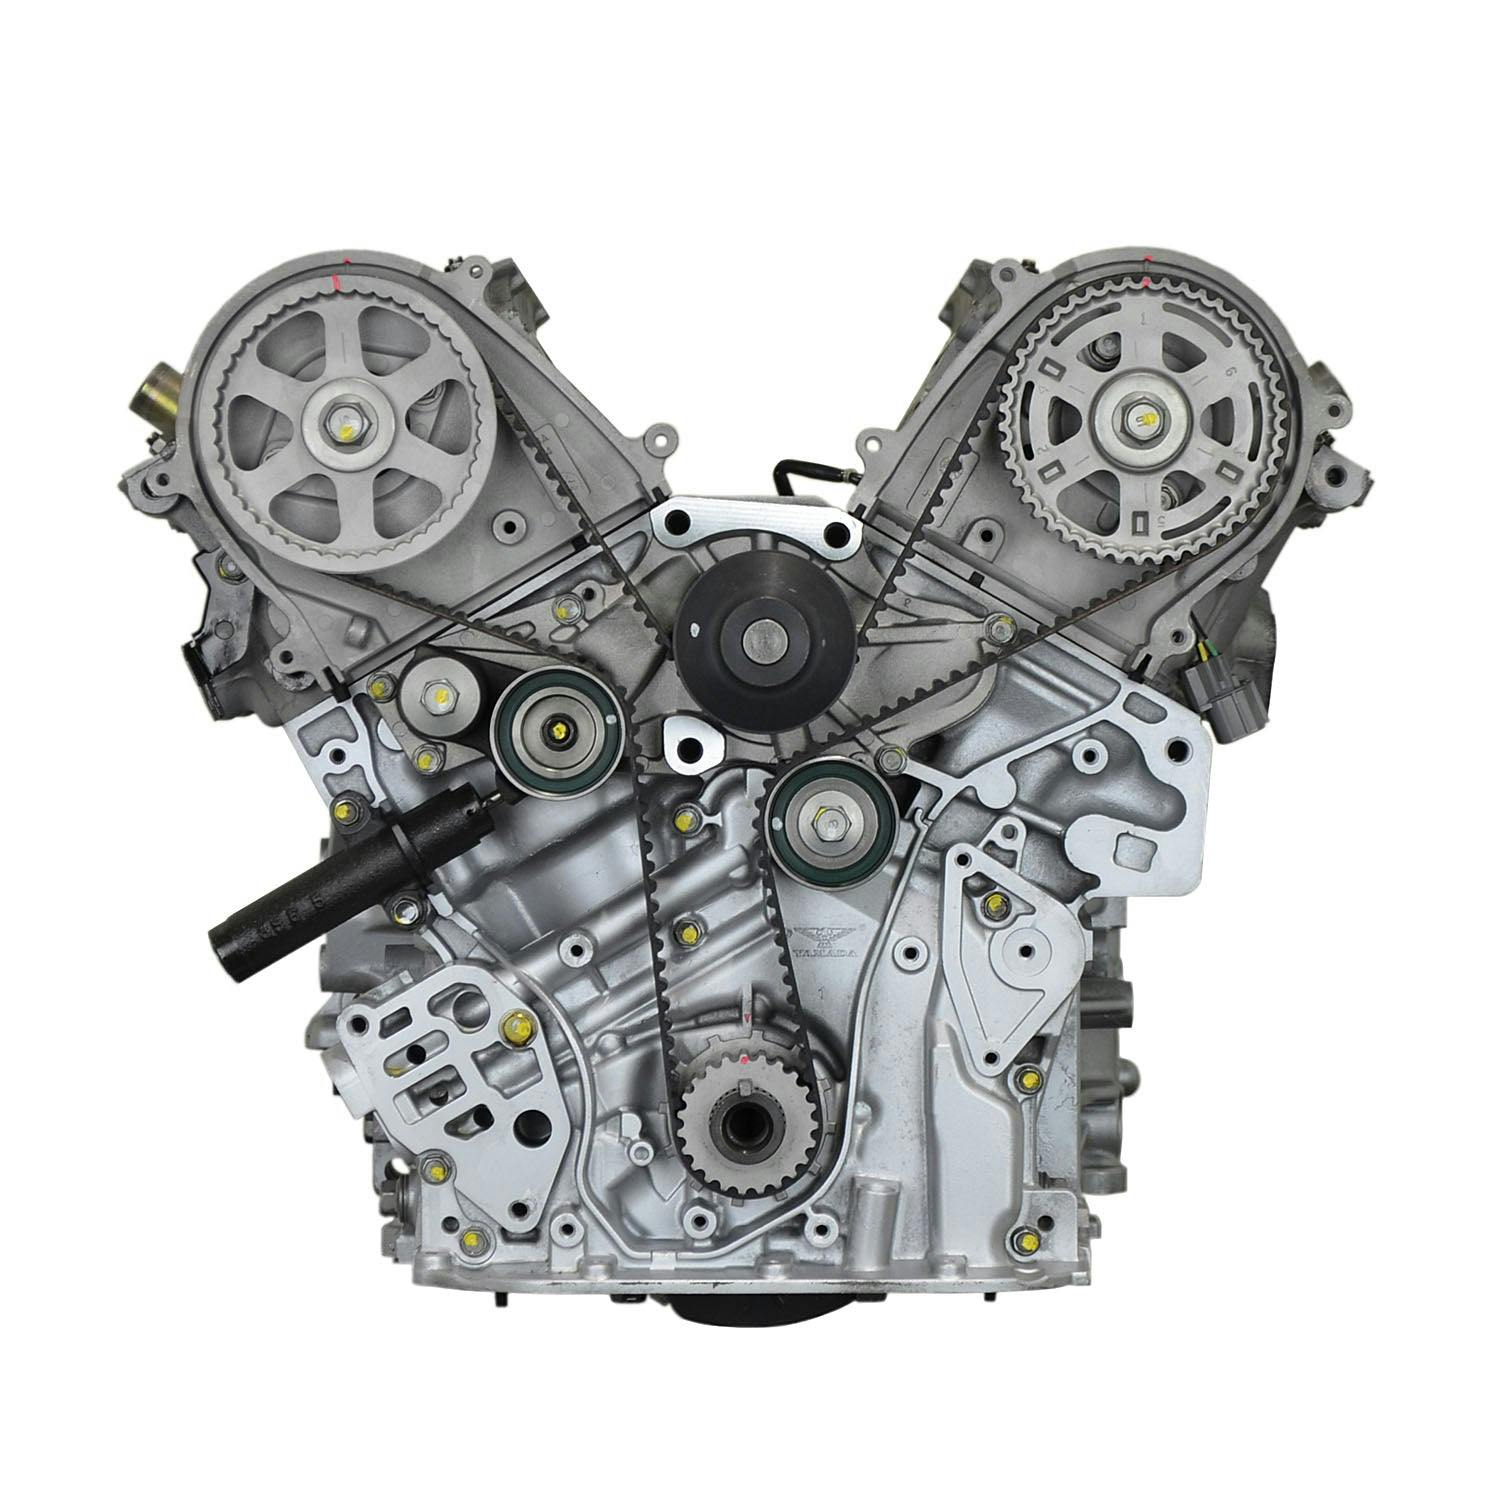 3.5L V6 Engine for 2001-2002 Acura MDX